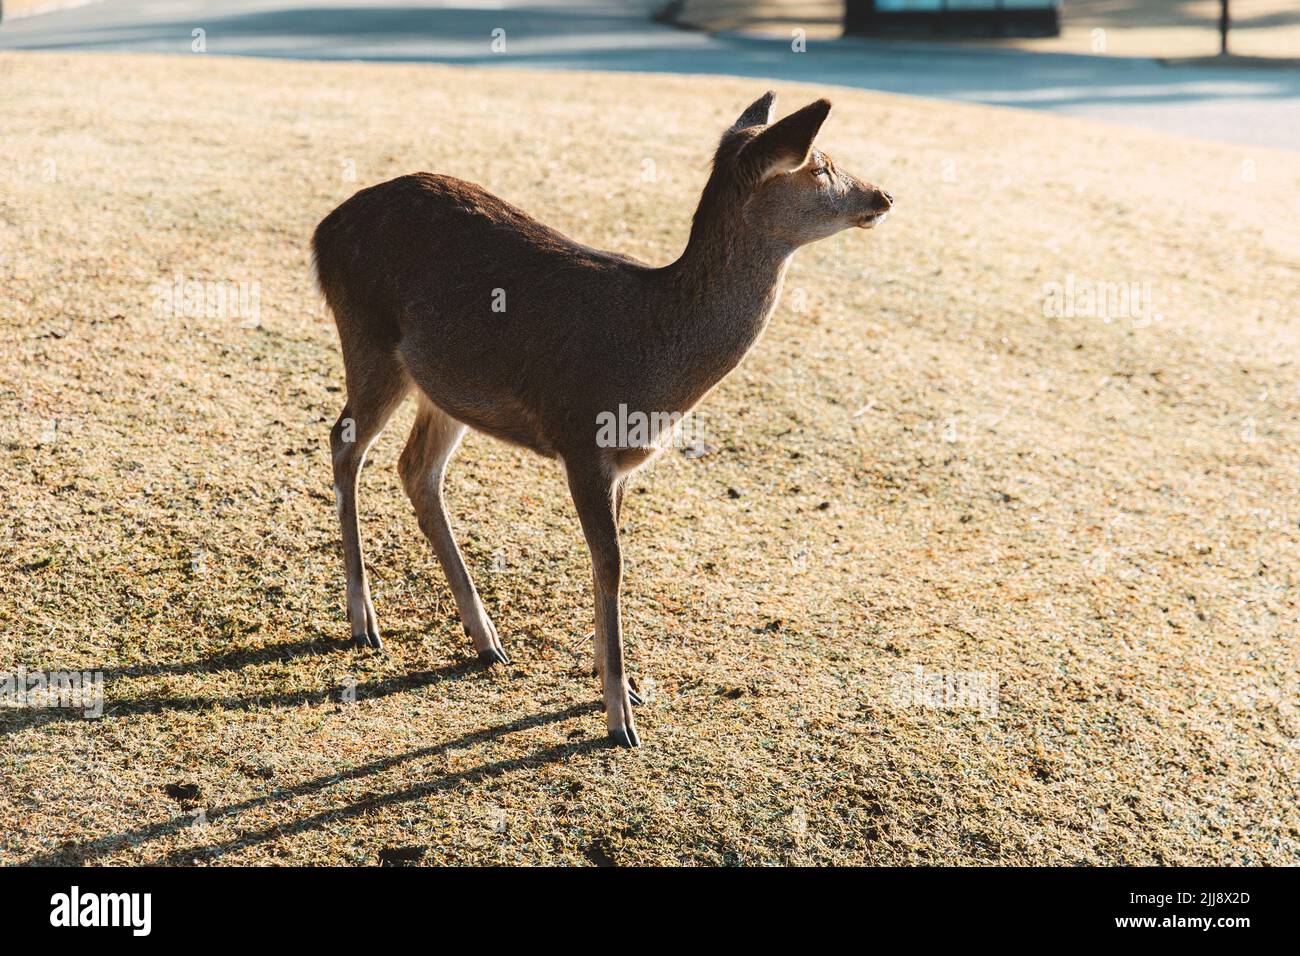 Wild Deer in Nara Park popular travel location in Kansai region of Japan. Stock Photo